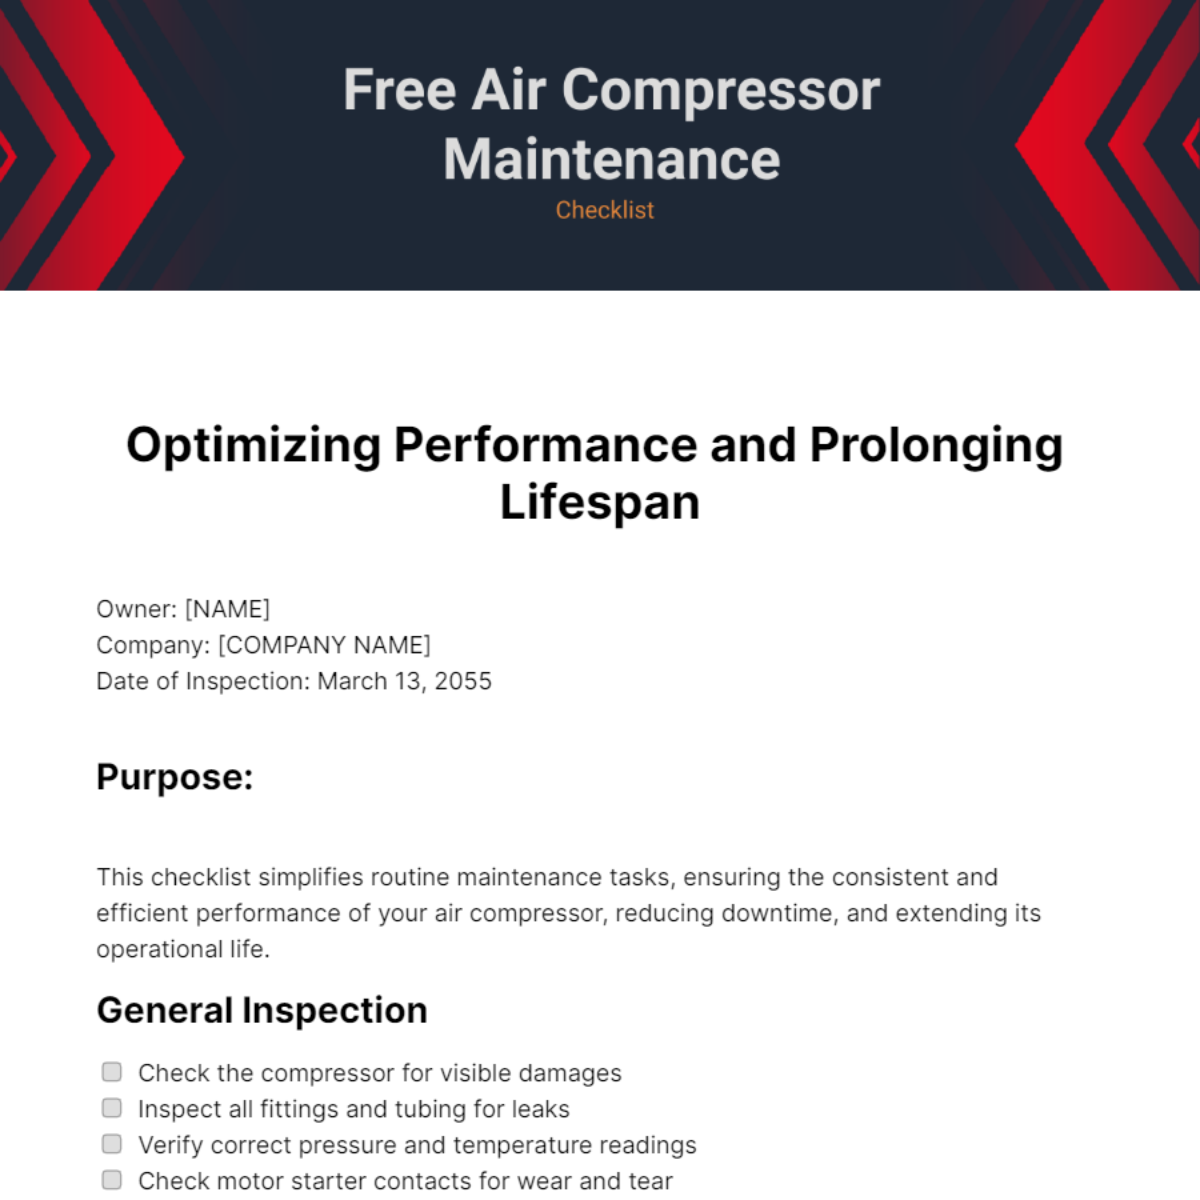 Free Air Compressor Maintenance Checklist Template